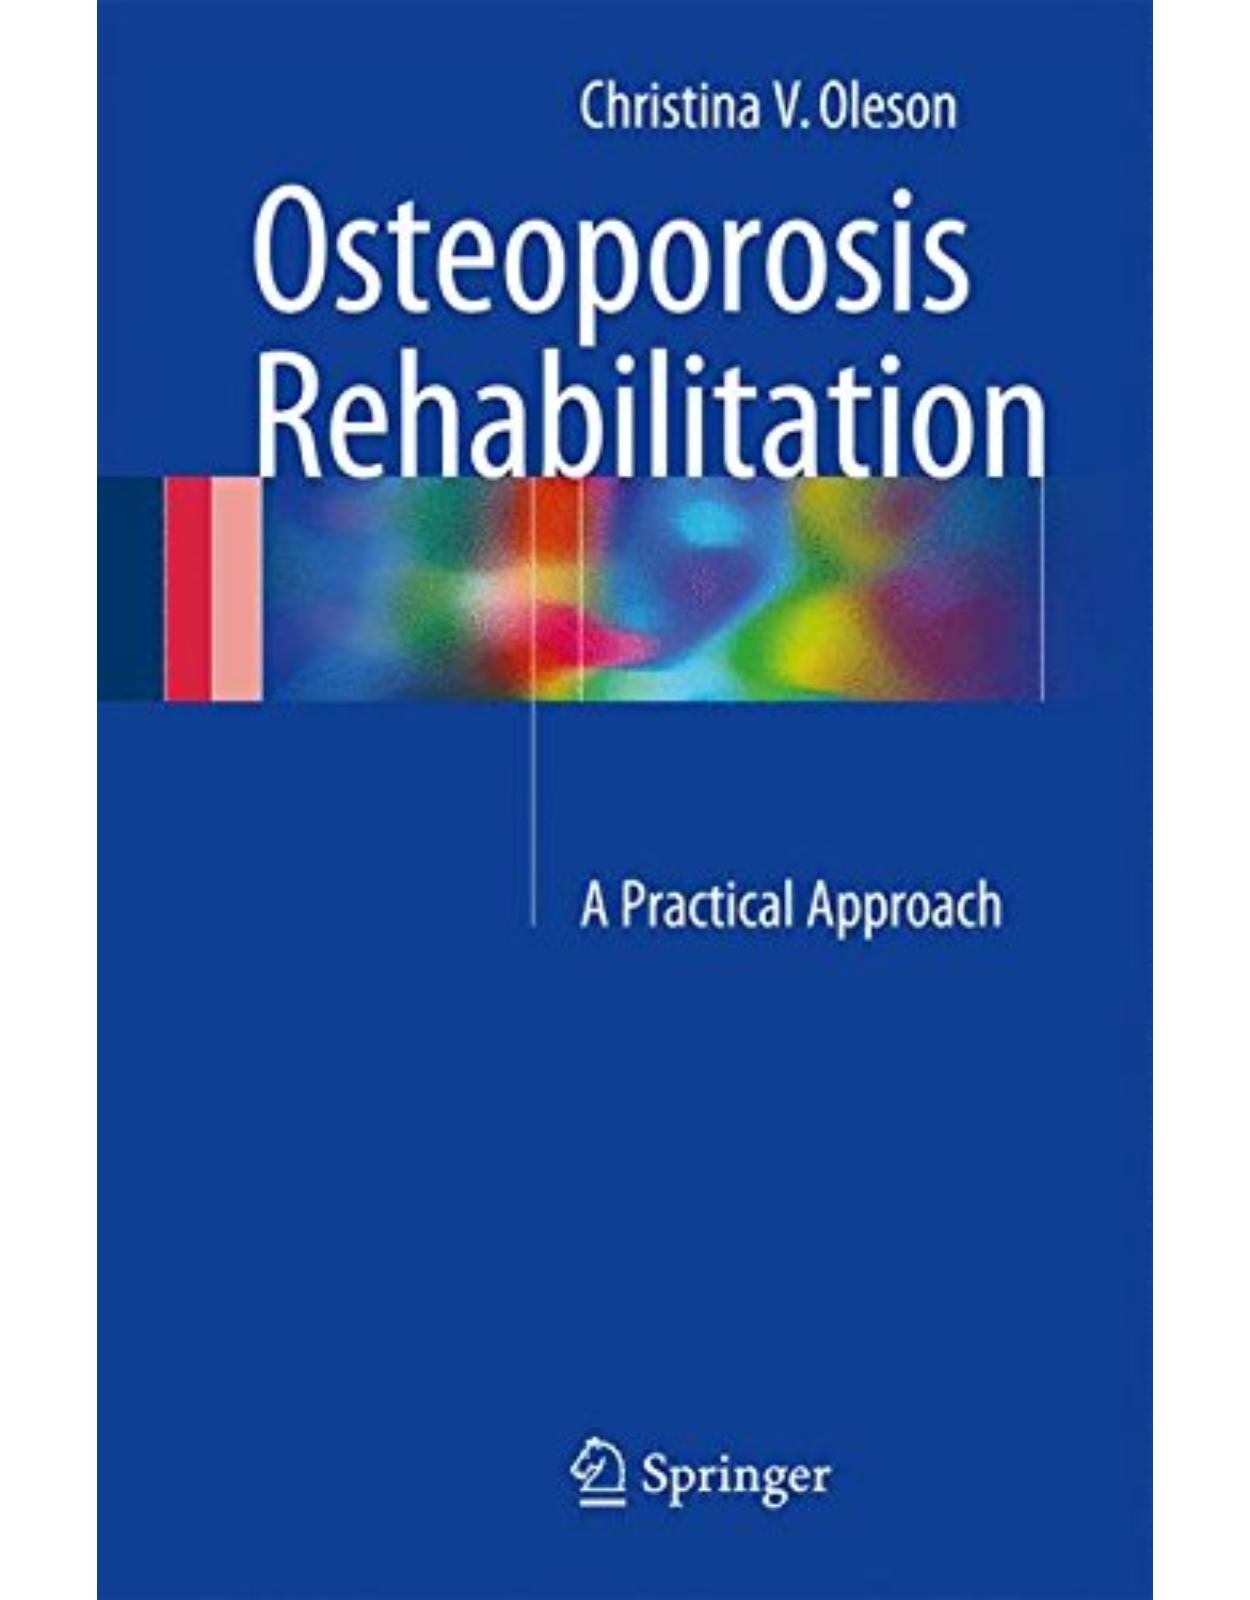 Osteoporosis Rehabilitation: A Practical Approach